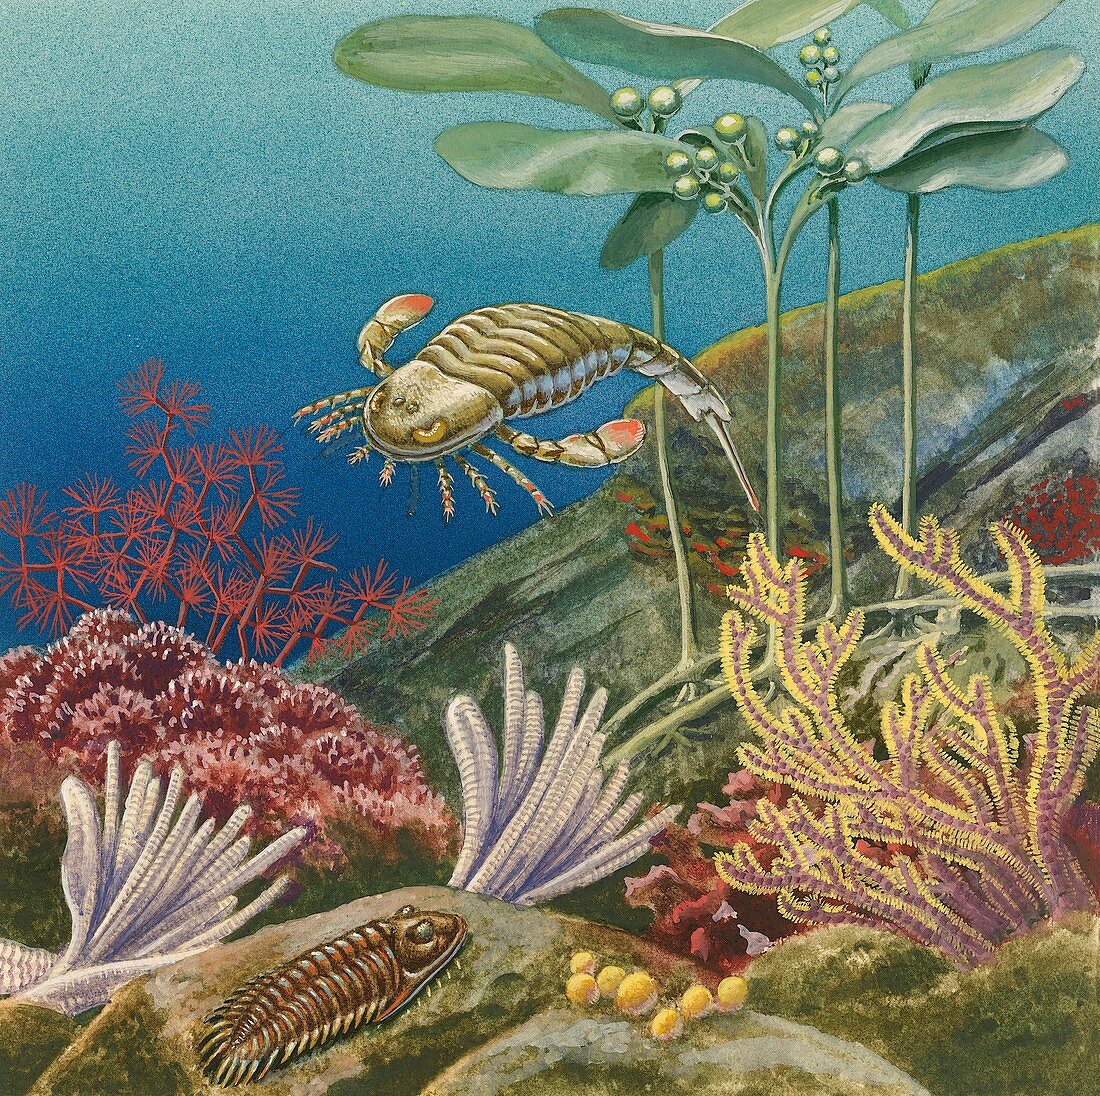 Palaeozoic underwater reef, illustration